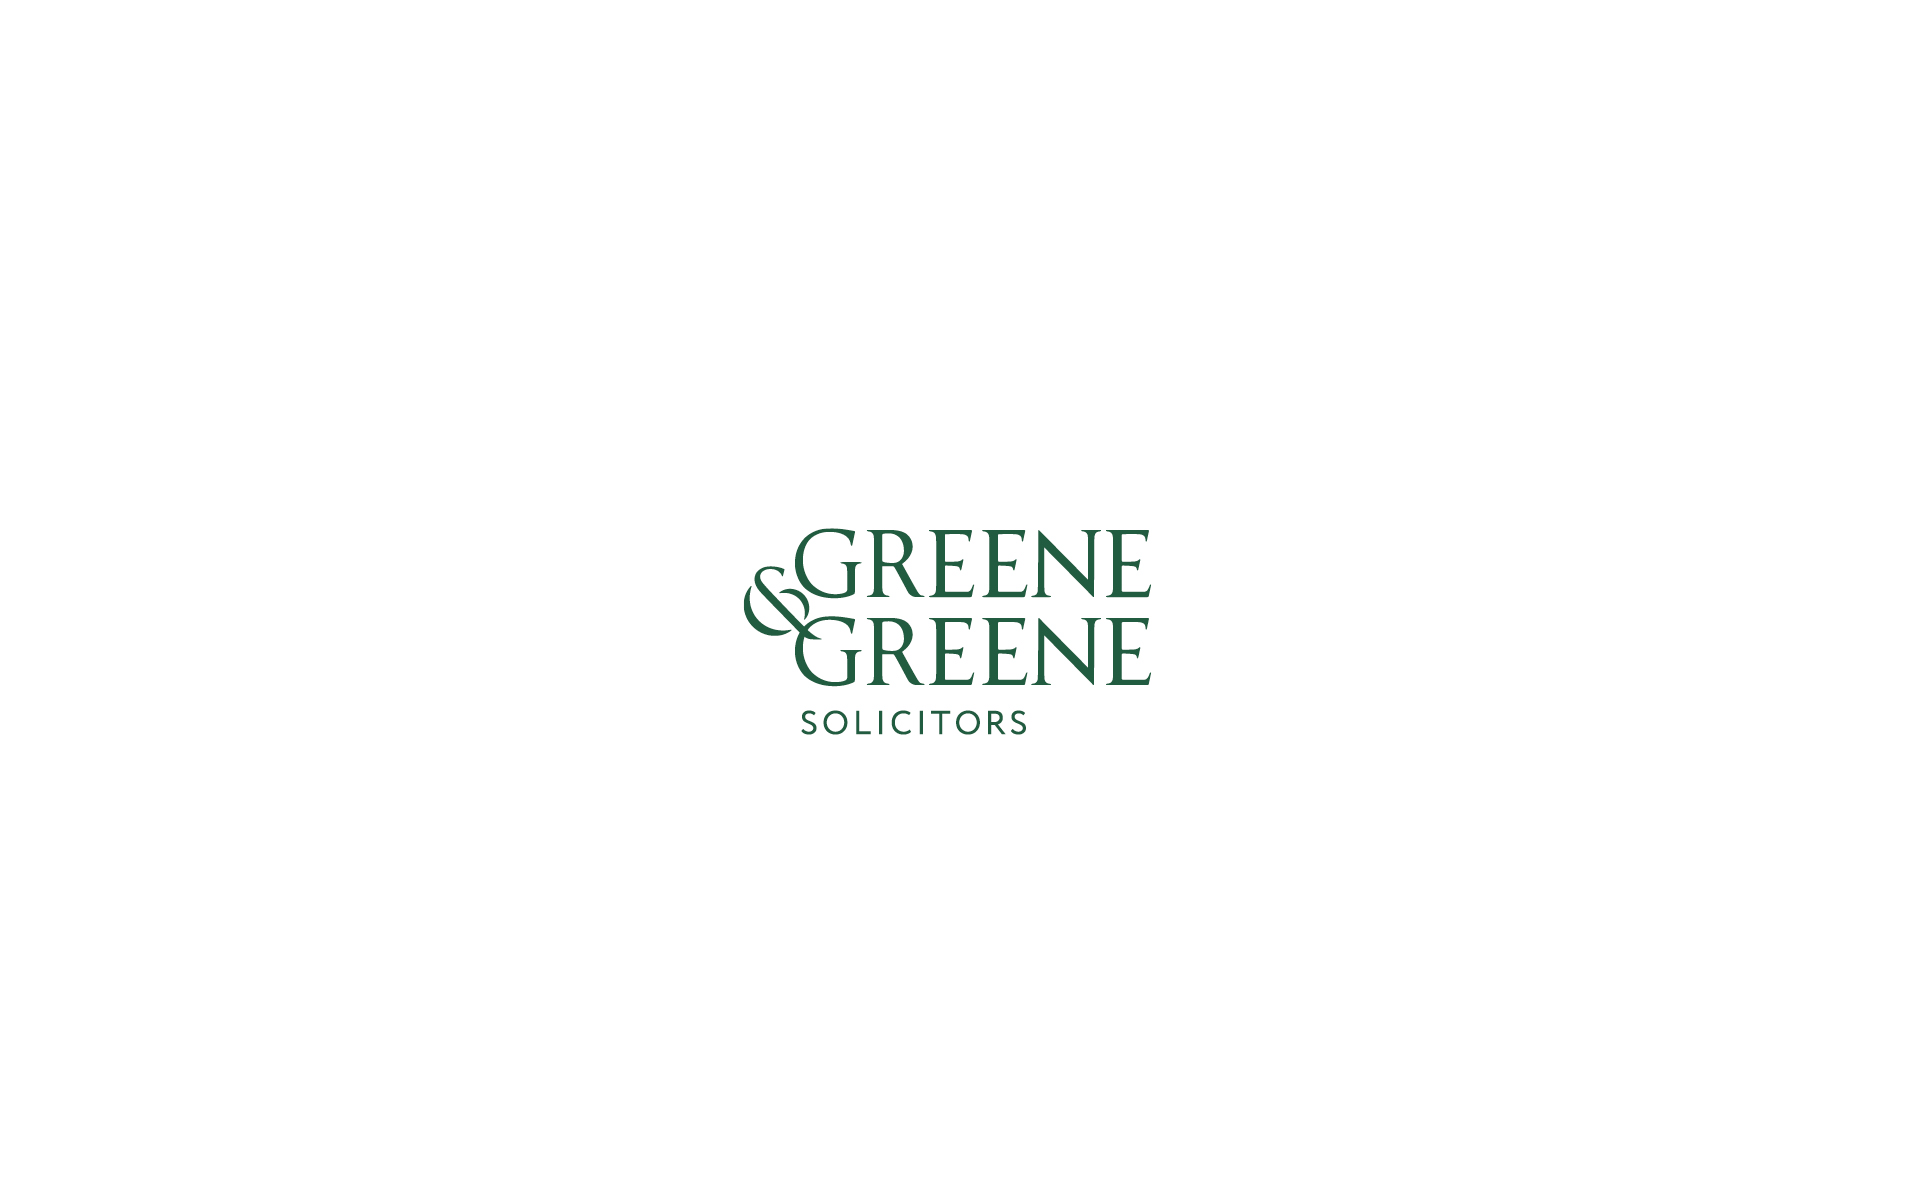 Greene & Greene stacked logo design